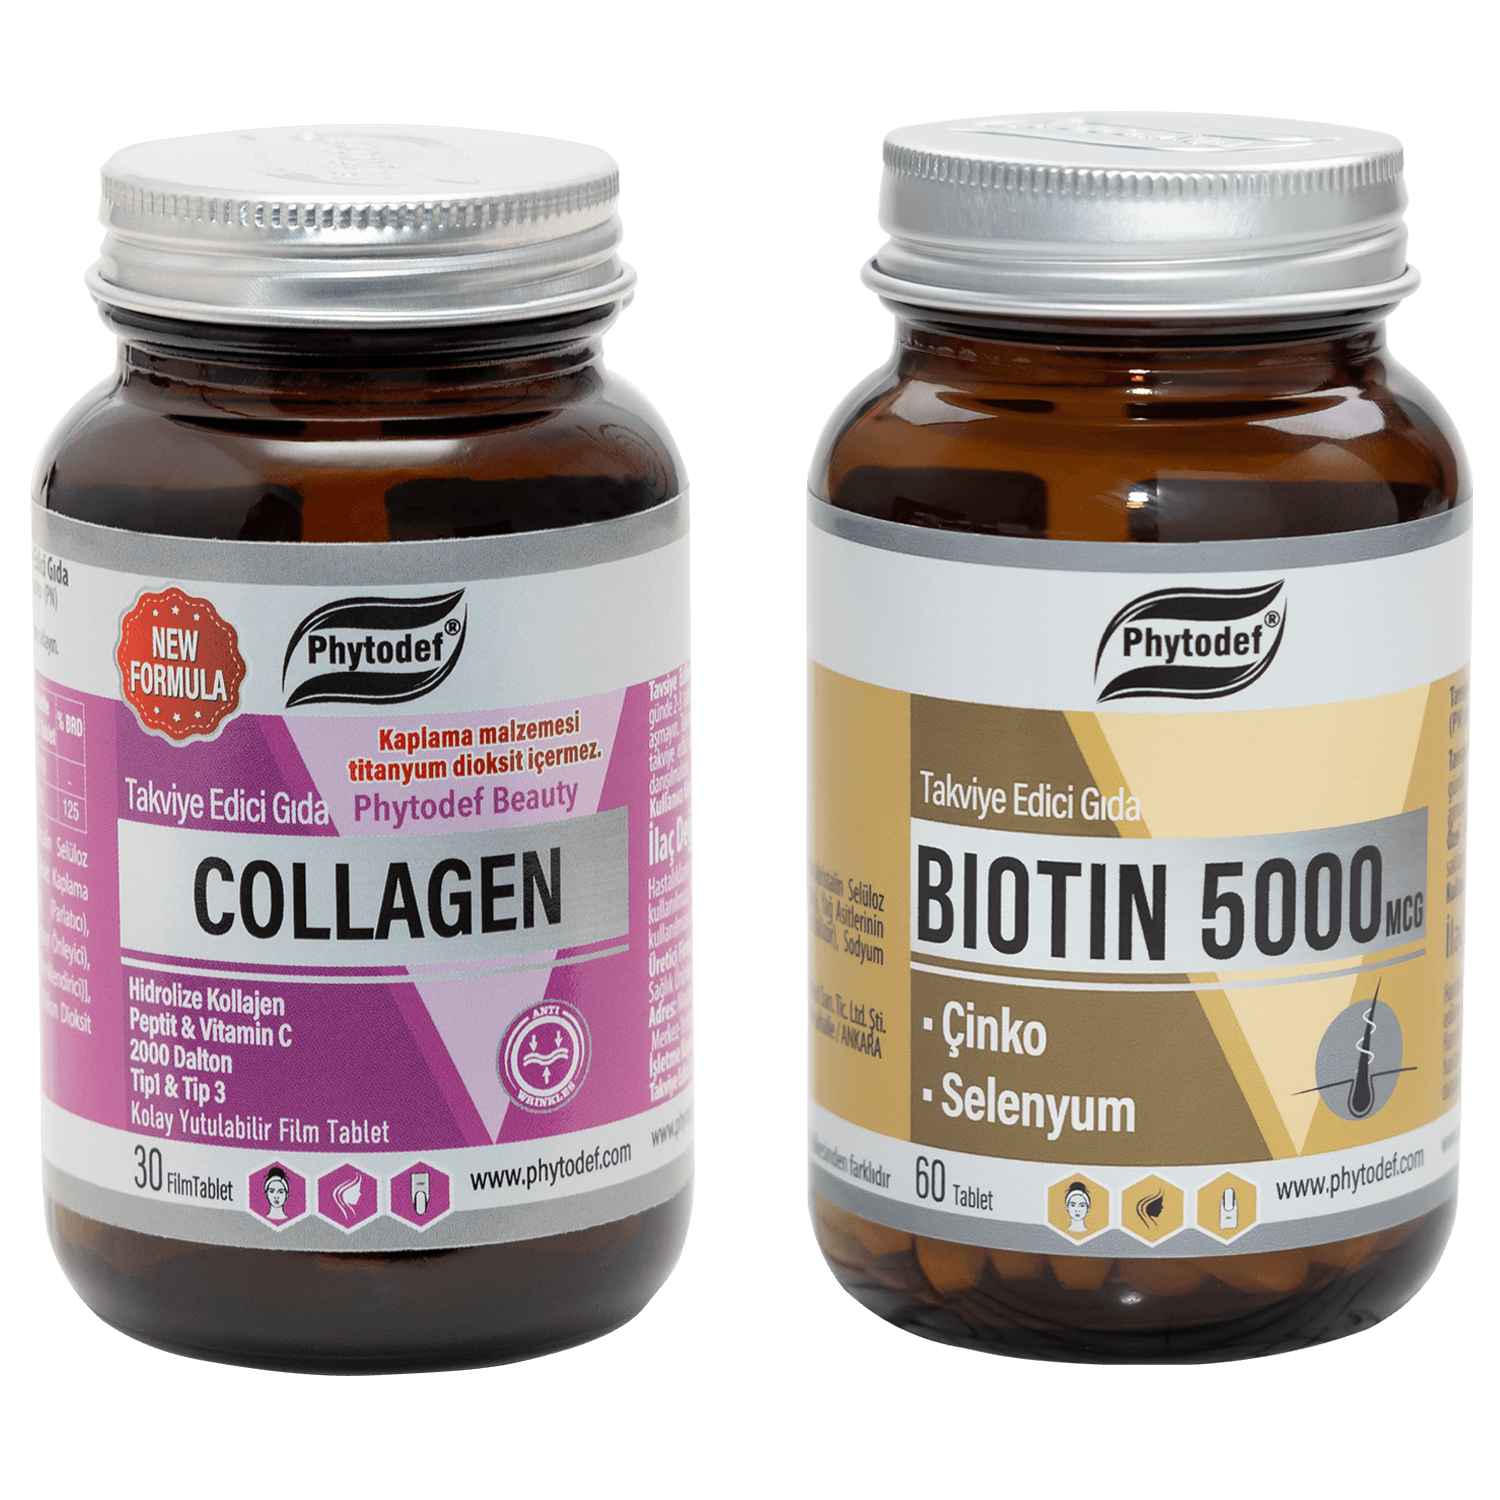 Kolajen + Vitamin C - 30 Tablet & Biotin 5000 mcg - 60 Tablet